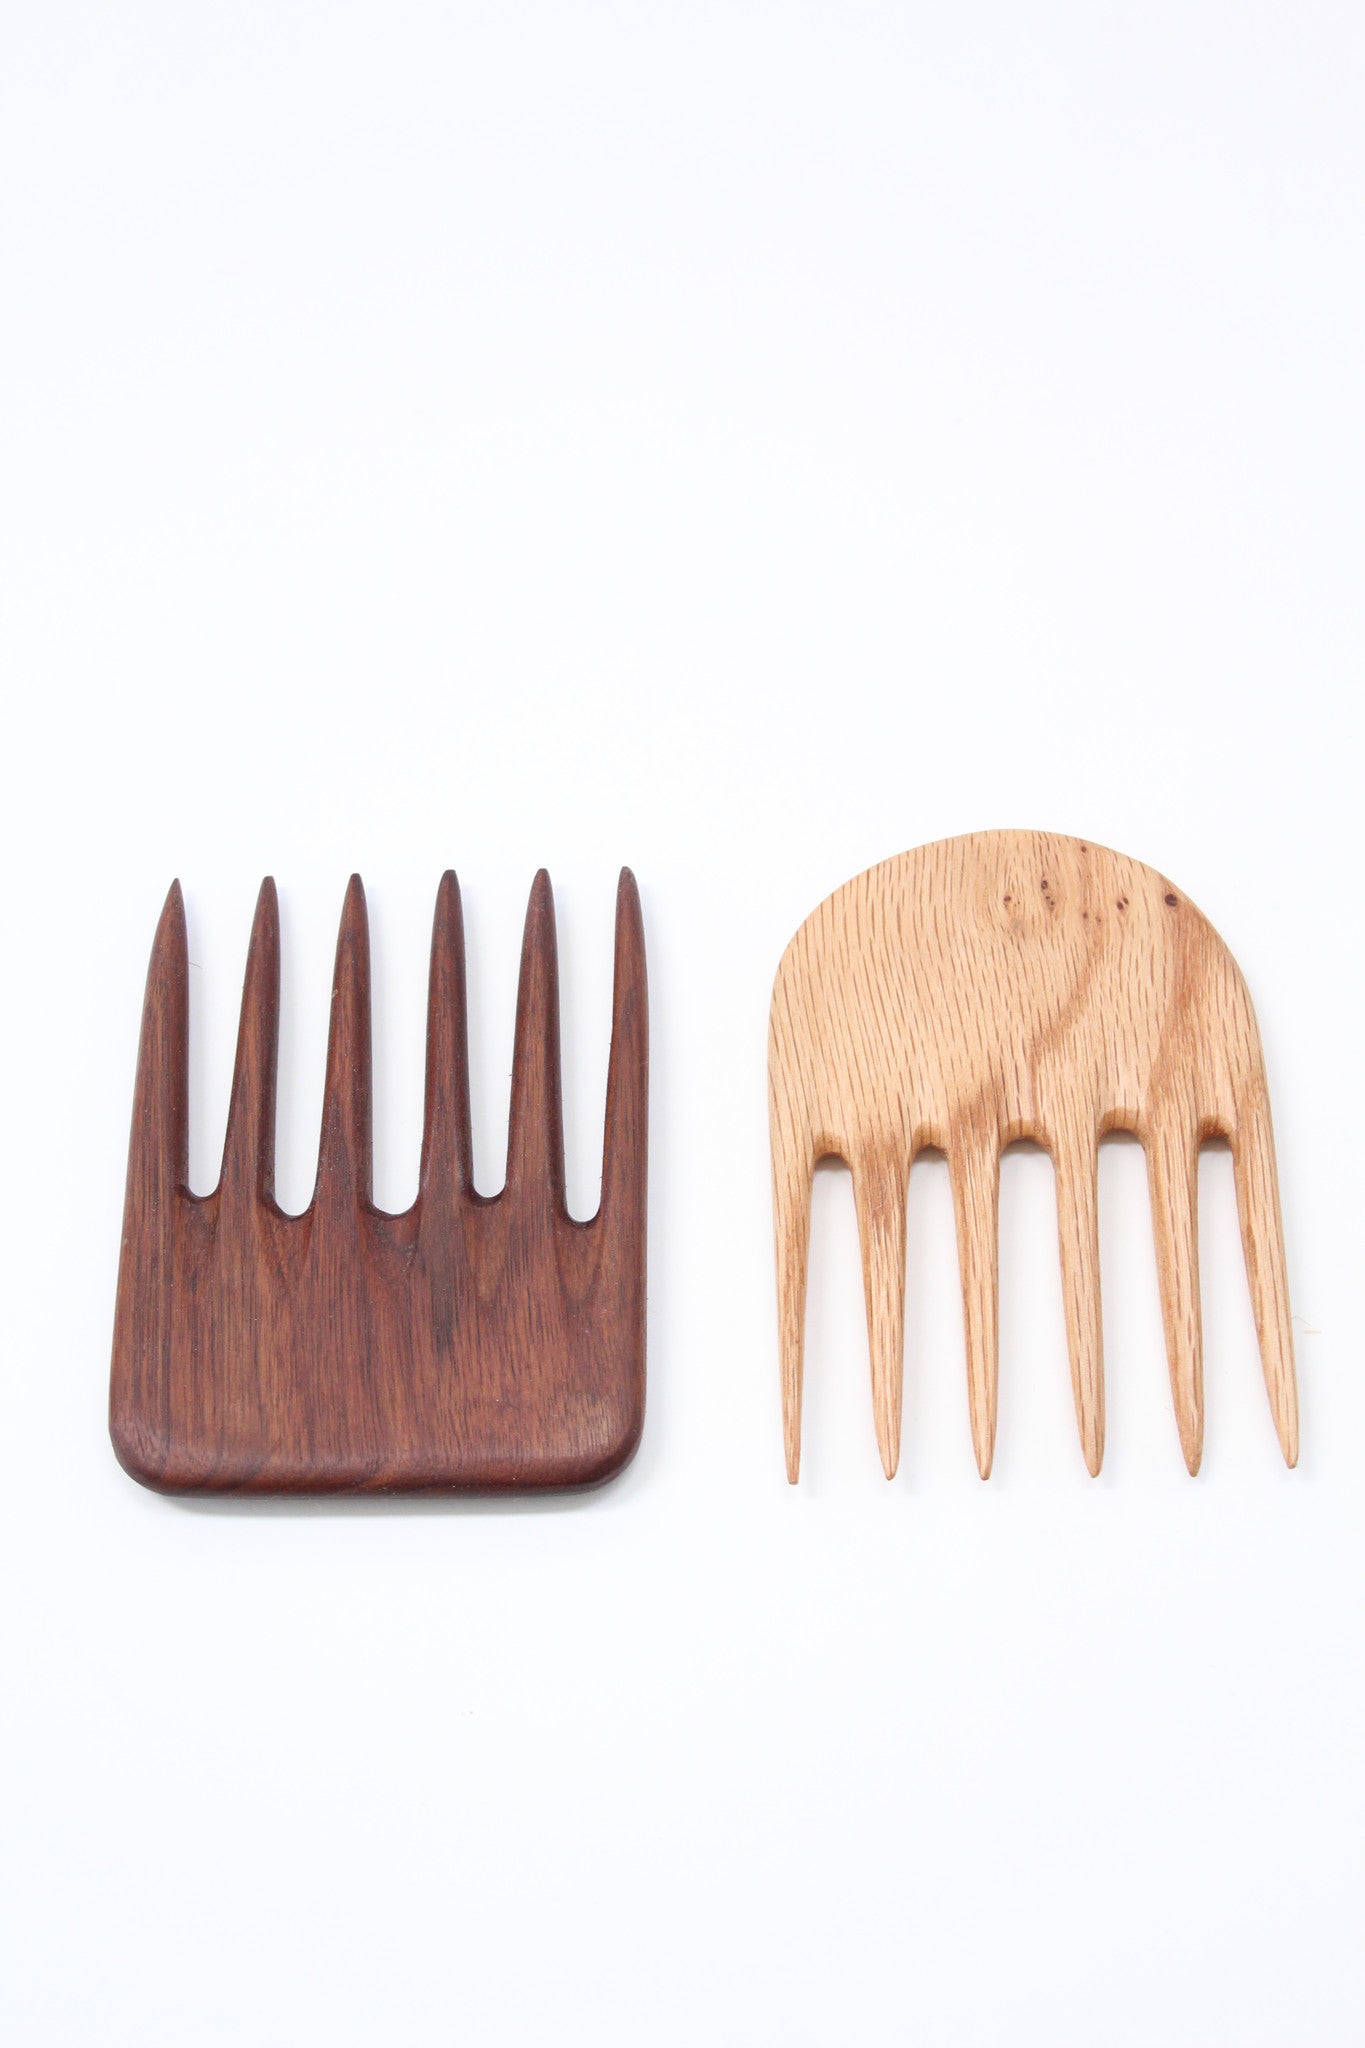 Hand Carved Wood Comb / Beklina